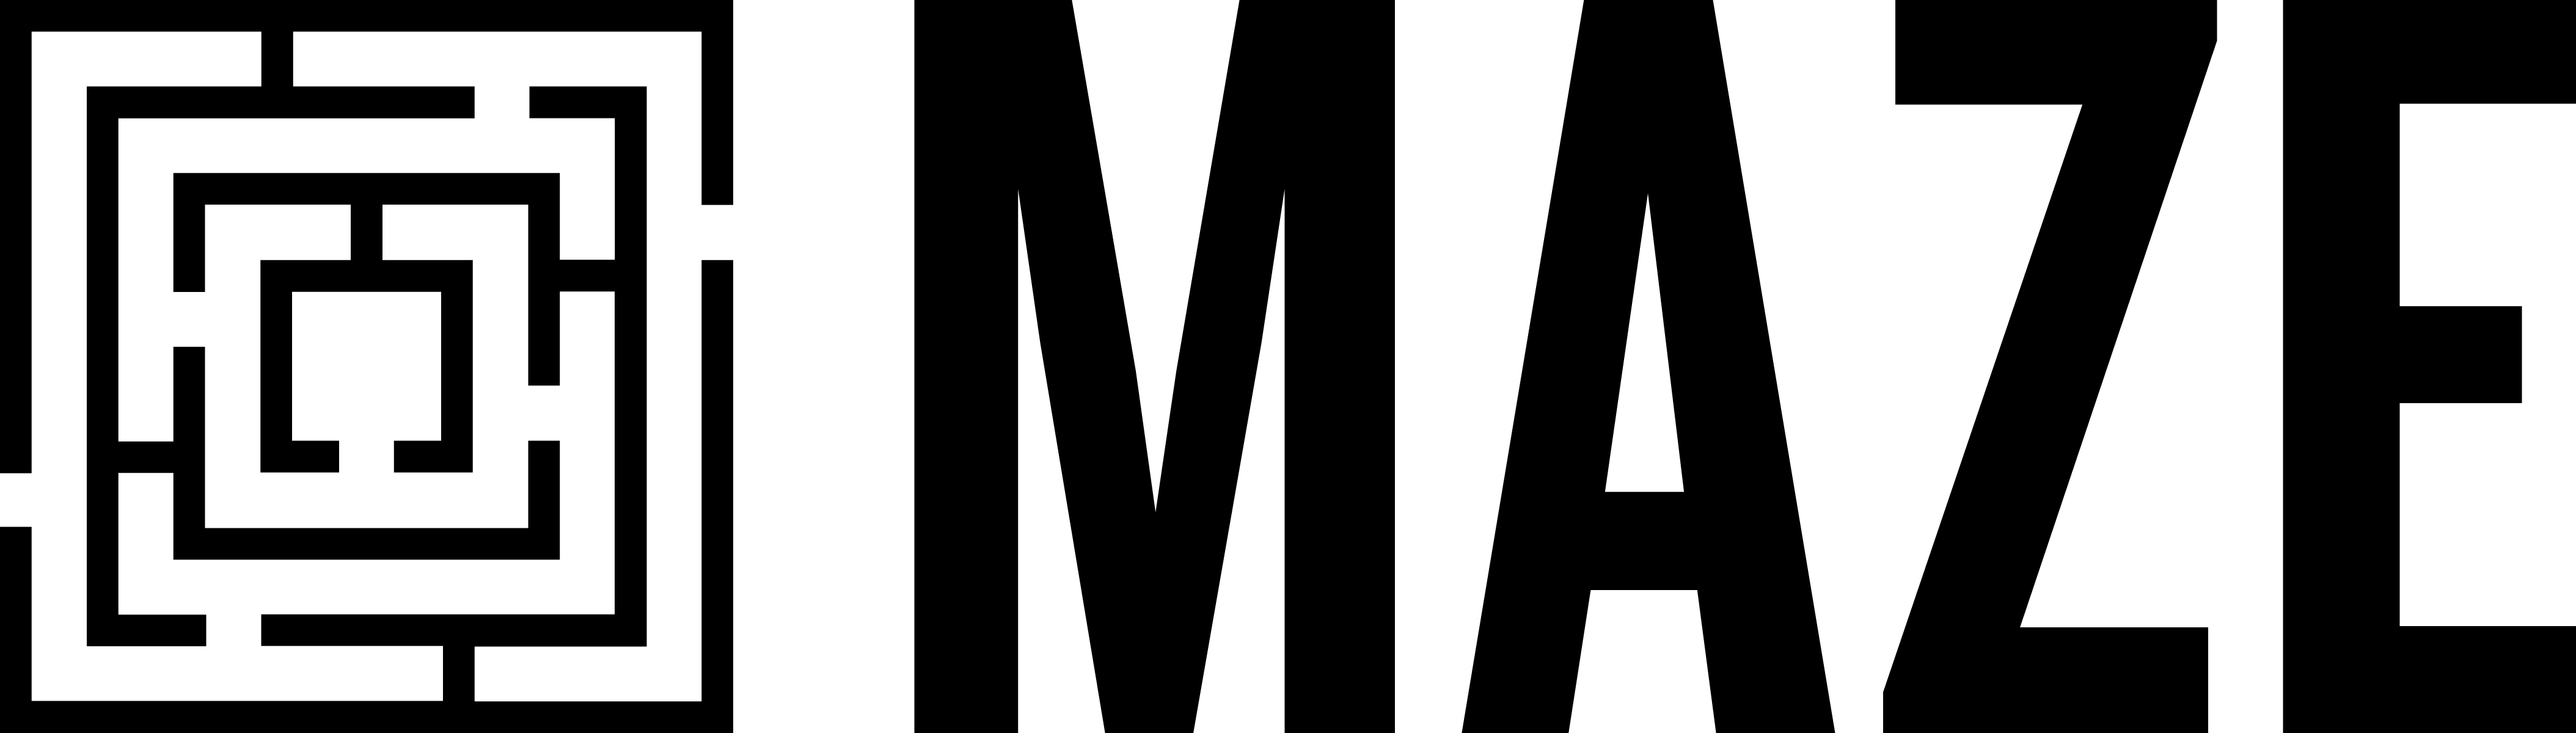 Maze Group Logo_black